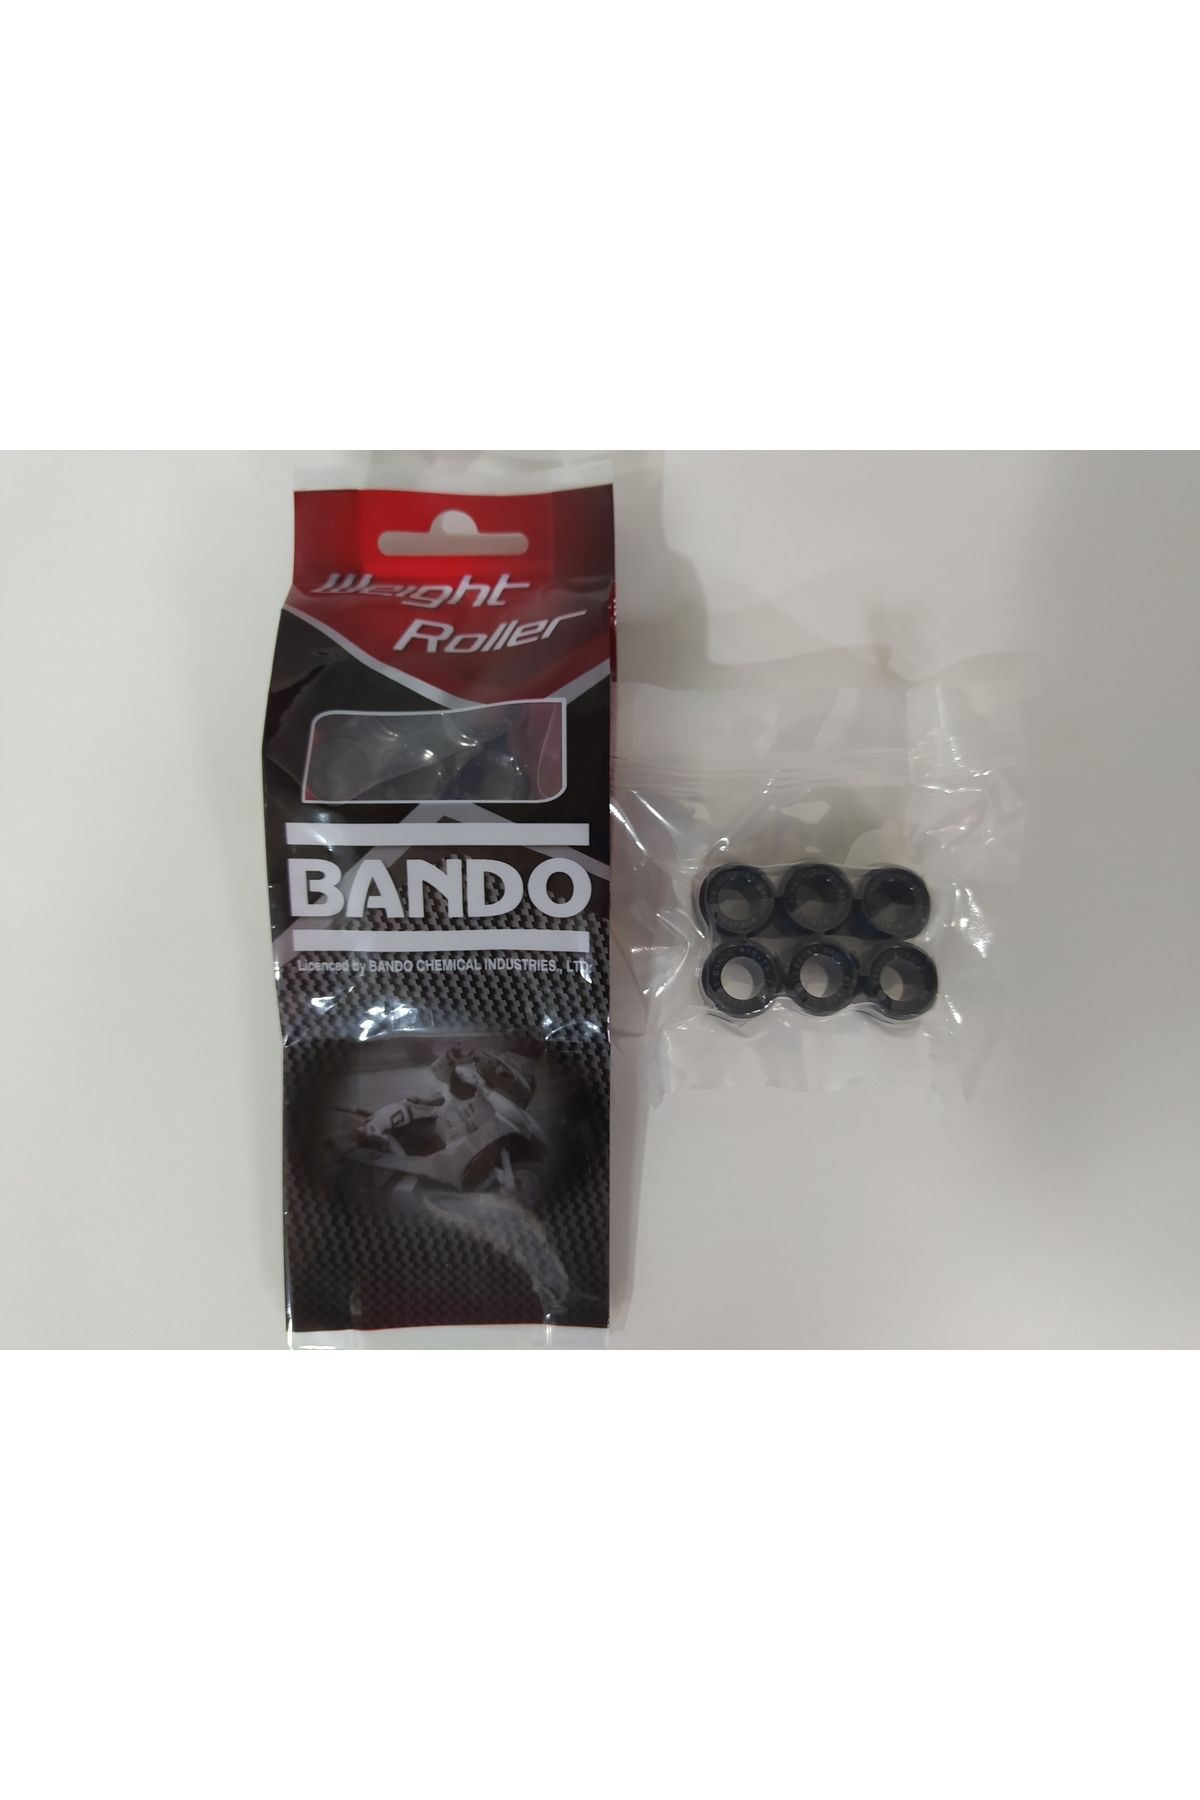 Bando Mondial Wing 50cc 80cc uyumlu Jap0n Band0 Baga 8 gr